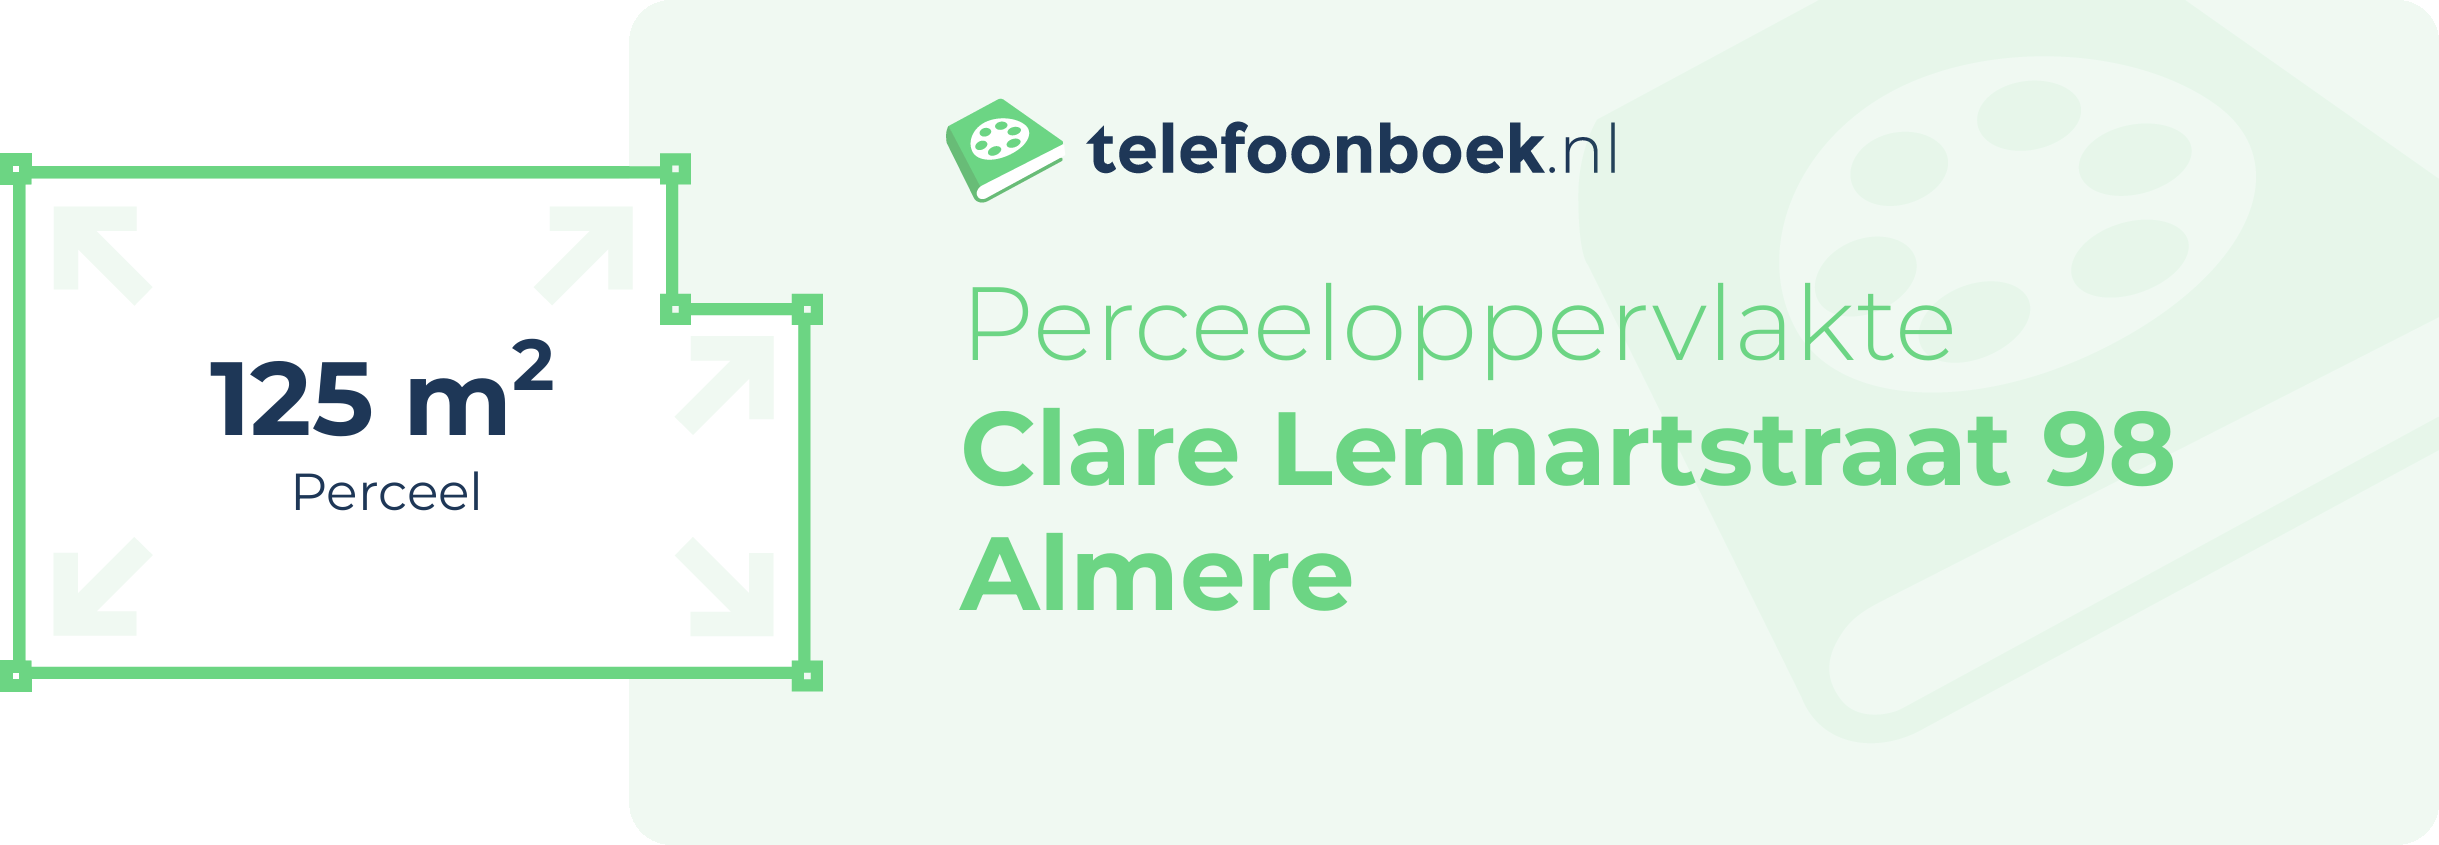 Perceeloppervlakte Clare Lennartstraat 98 Almere